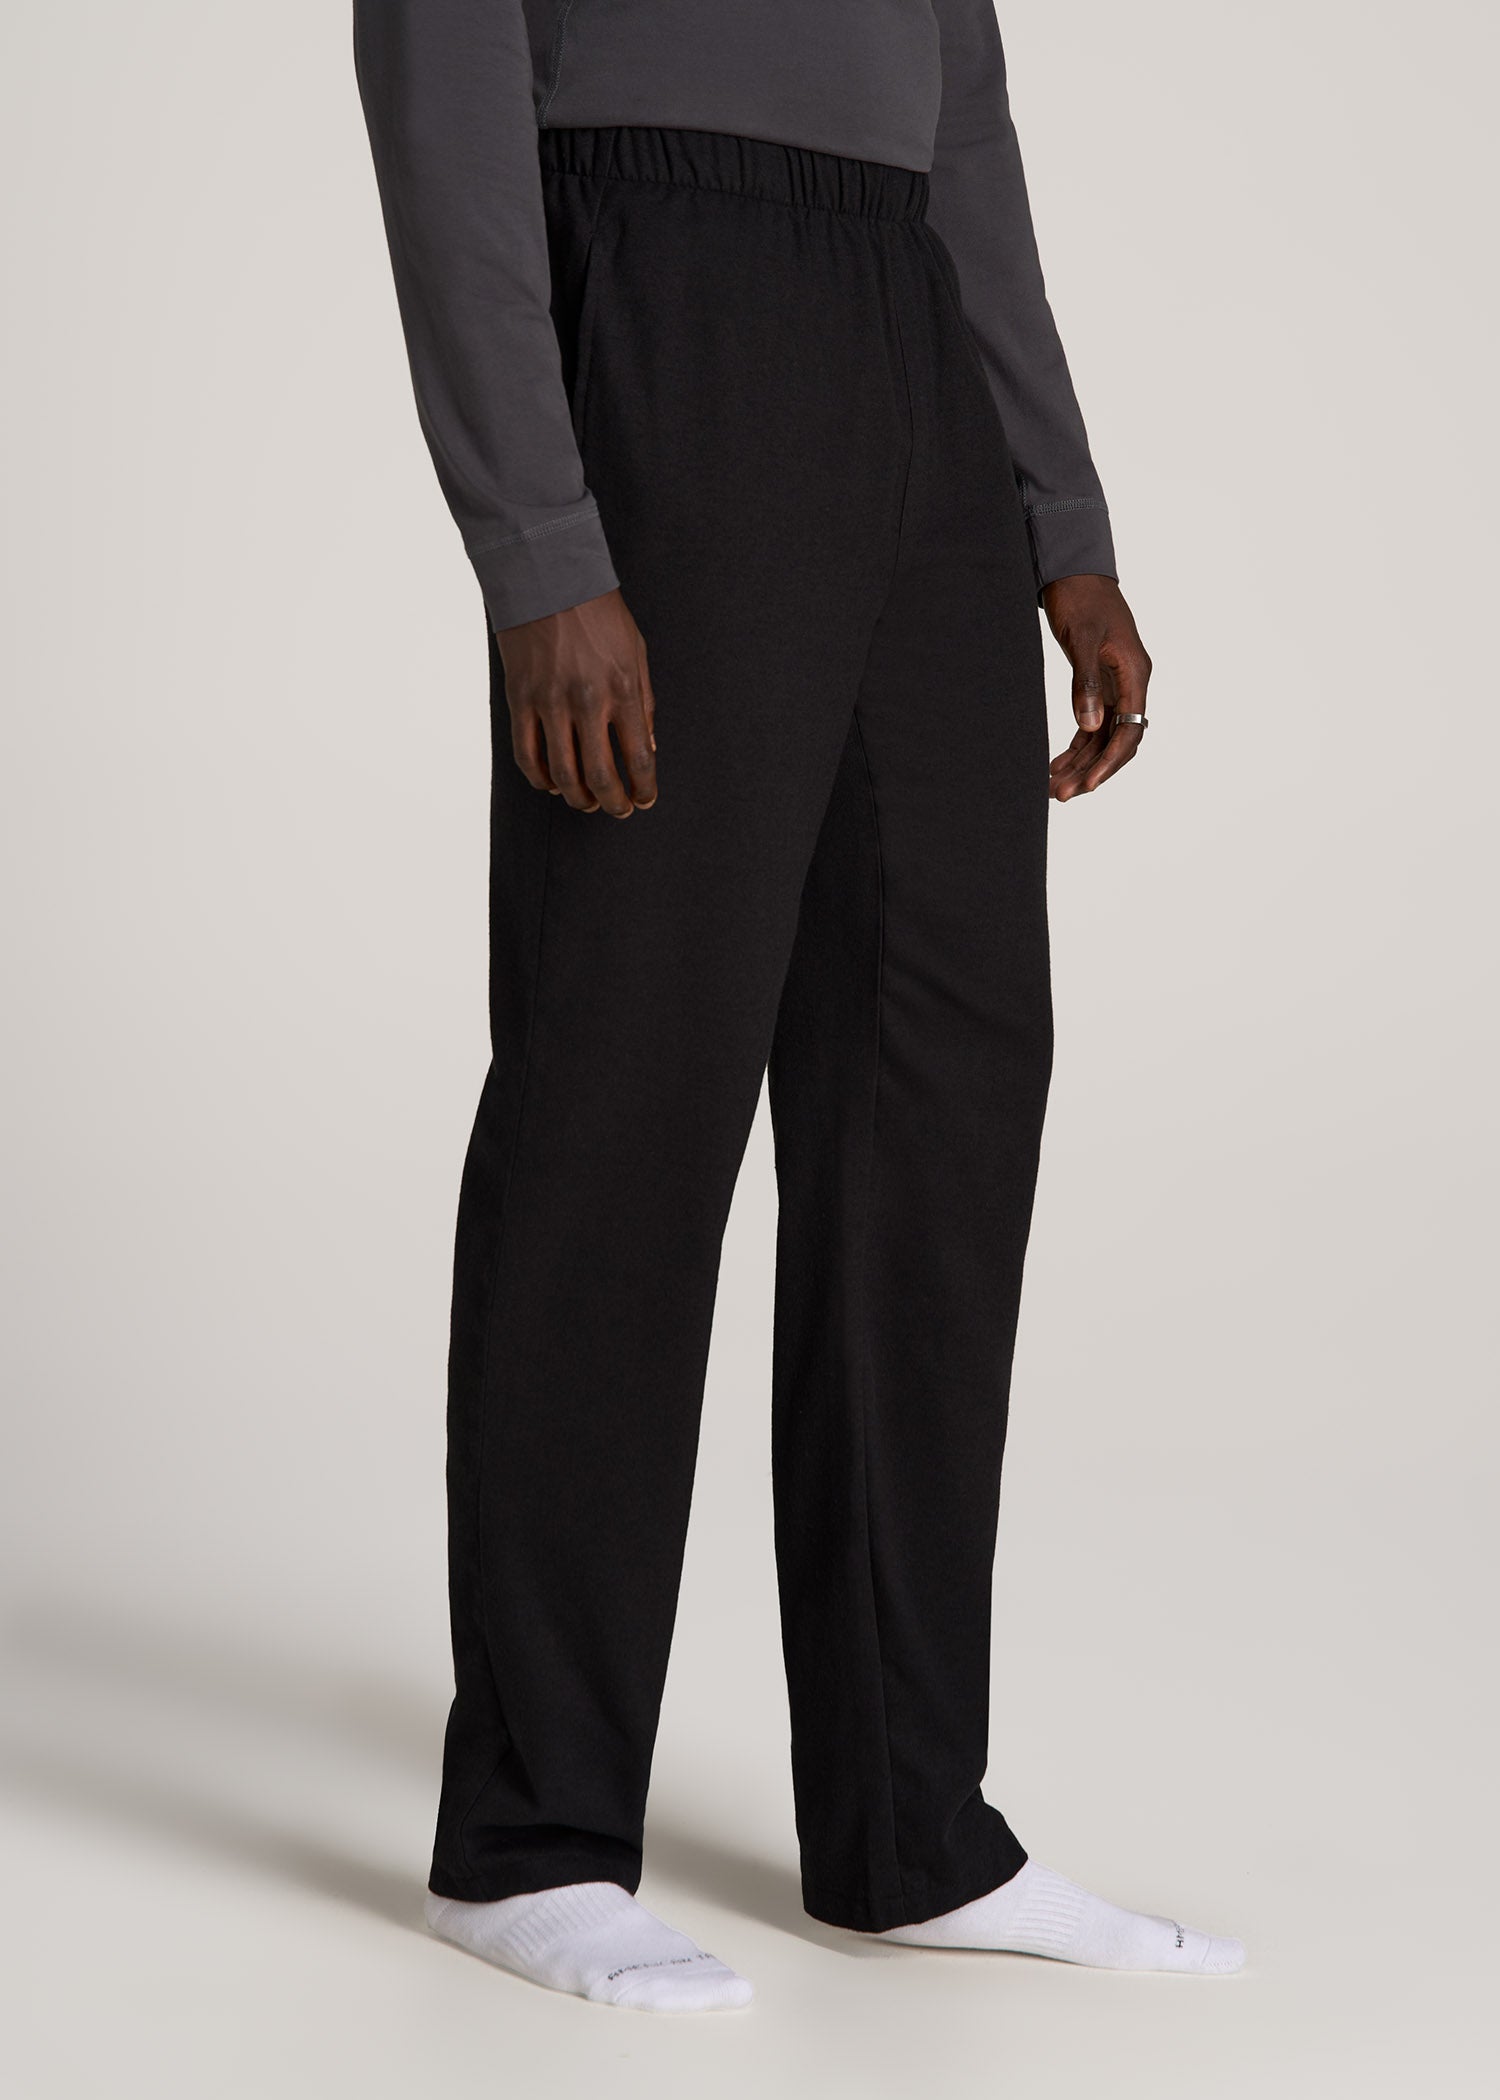 Men's Modal Pajama Pants Cotton Thin Stretch Sports Casual Loose